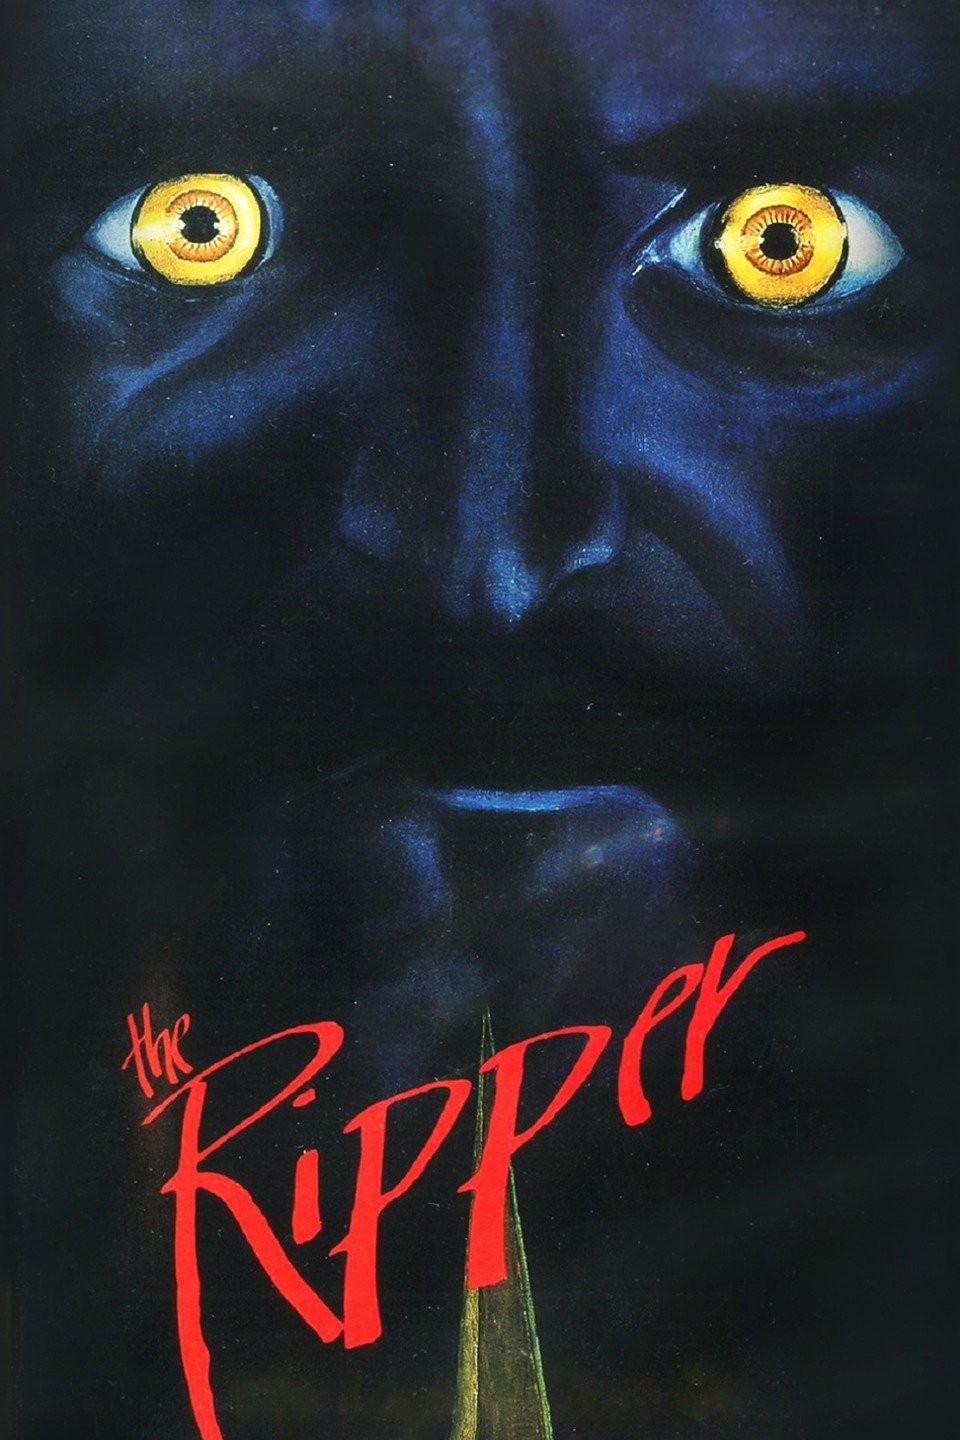 Slasher season 5: An interesting twist on Jack the Ripper (so far)